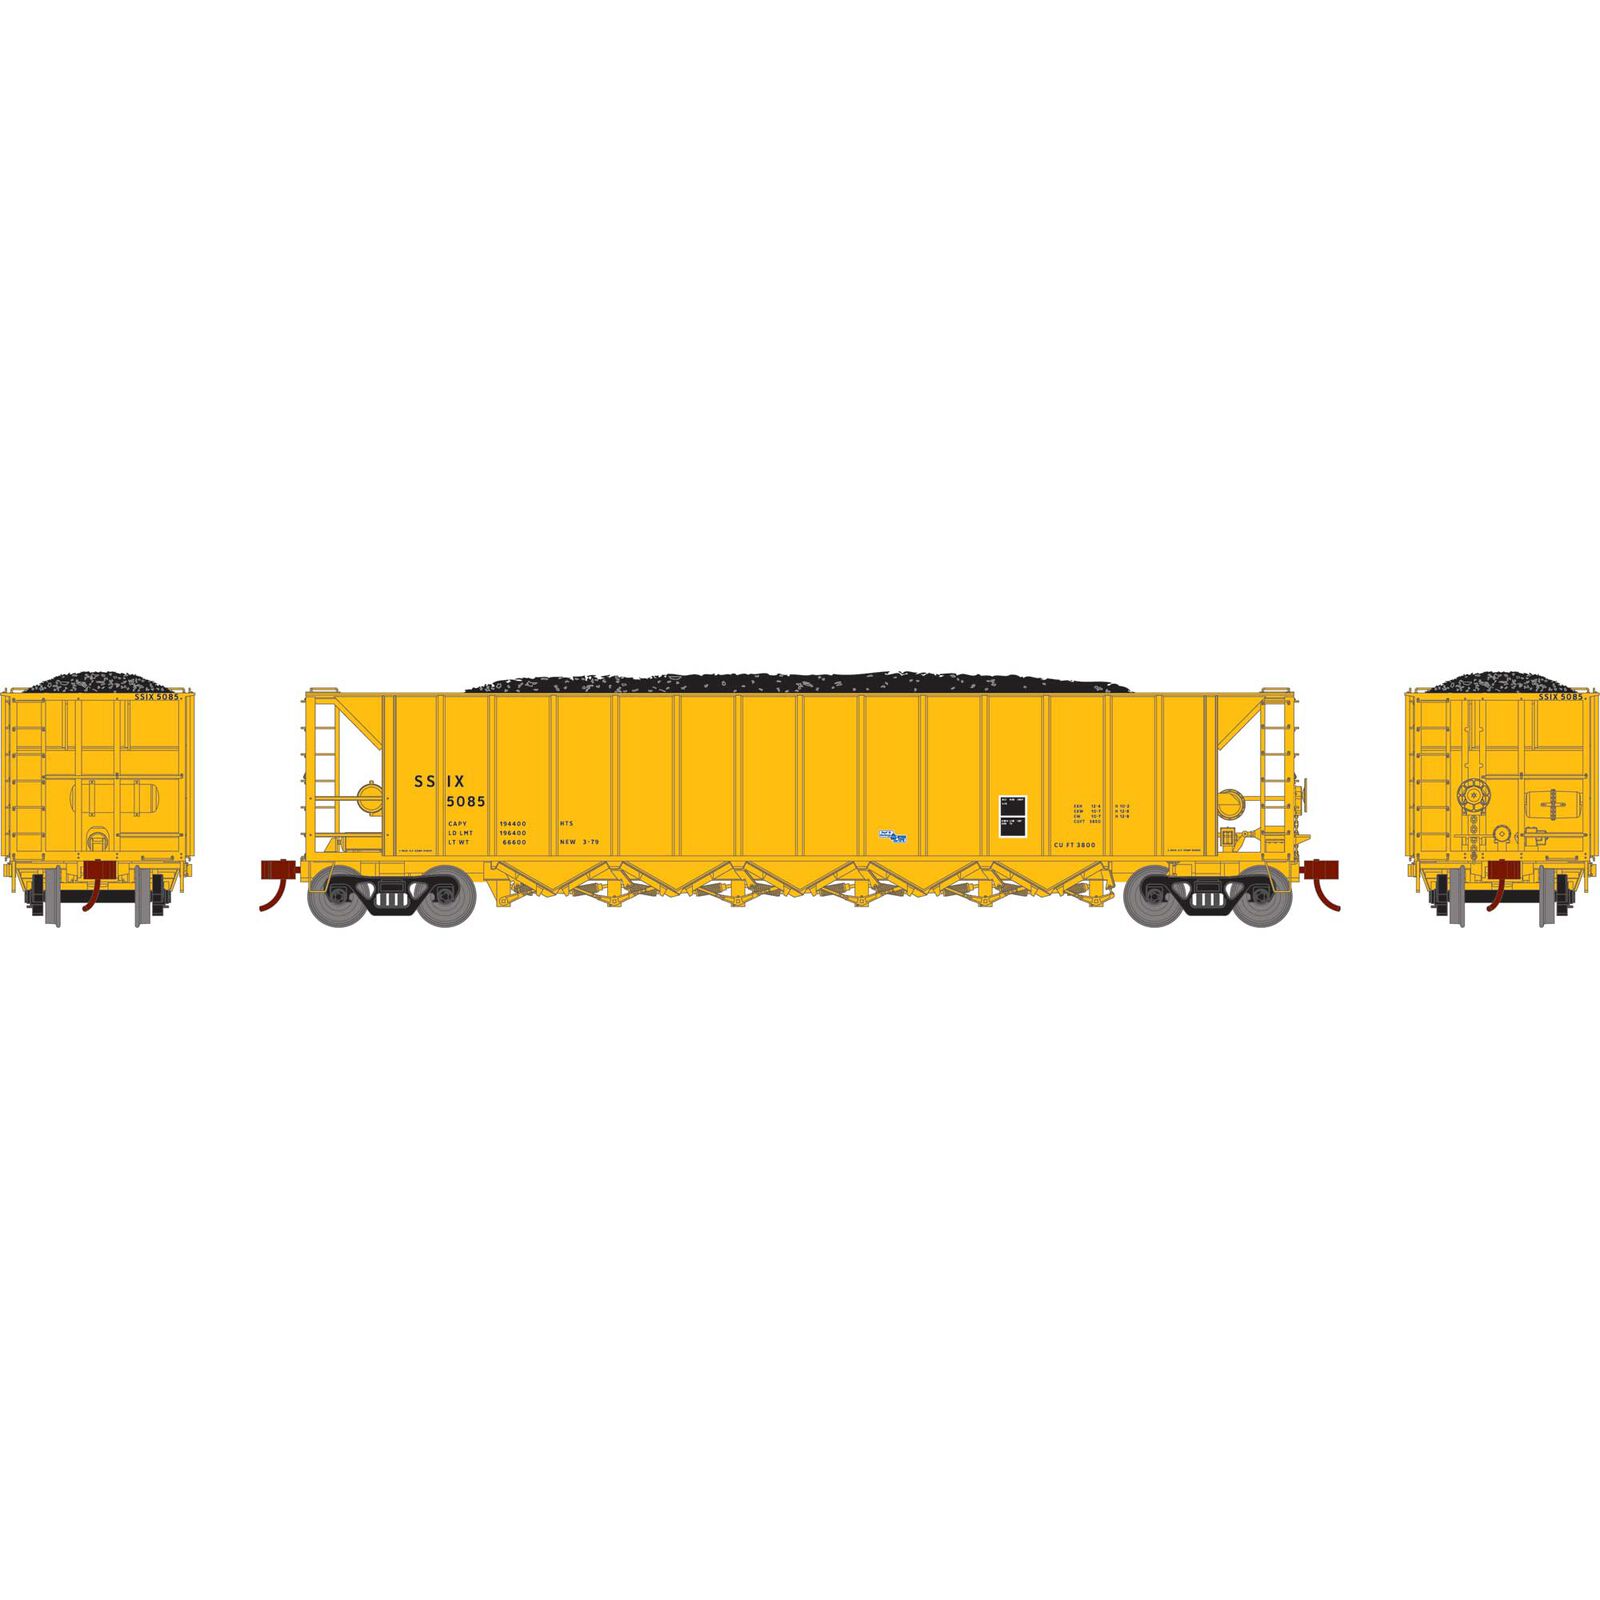 HO Ortner 5-Bay 5094 5098 SSIX 5099 Train Rapid Discharge / 5101 / | / #5091 (5) Athearn / Model Hopper